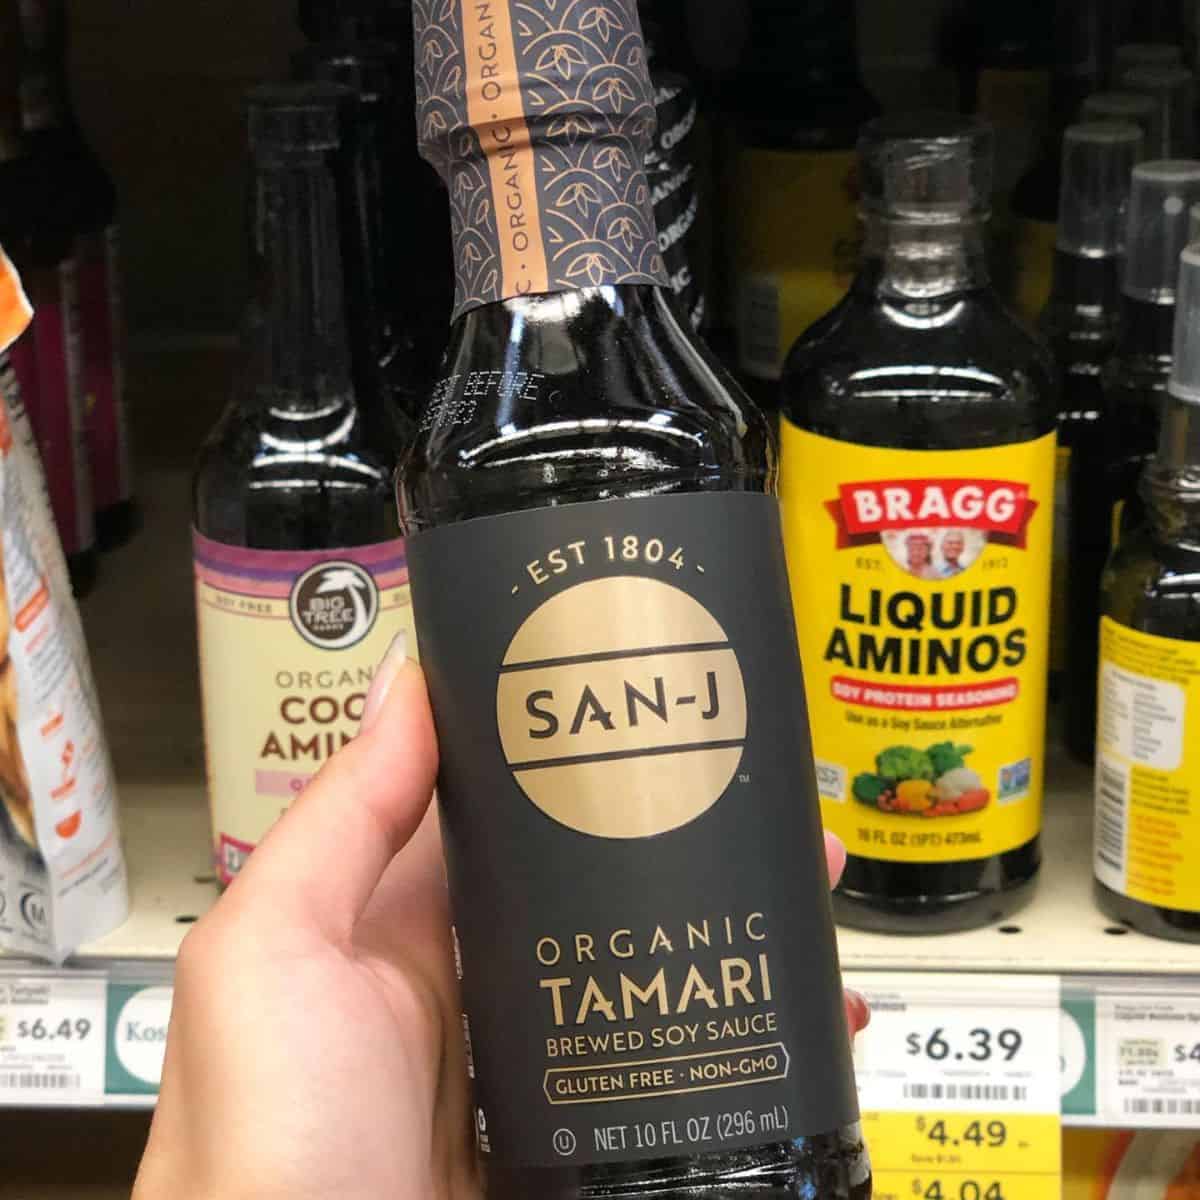 A bottle of Tamari soy sauce as an ingredient for Teriyaki Marinade